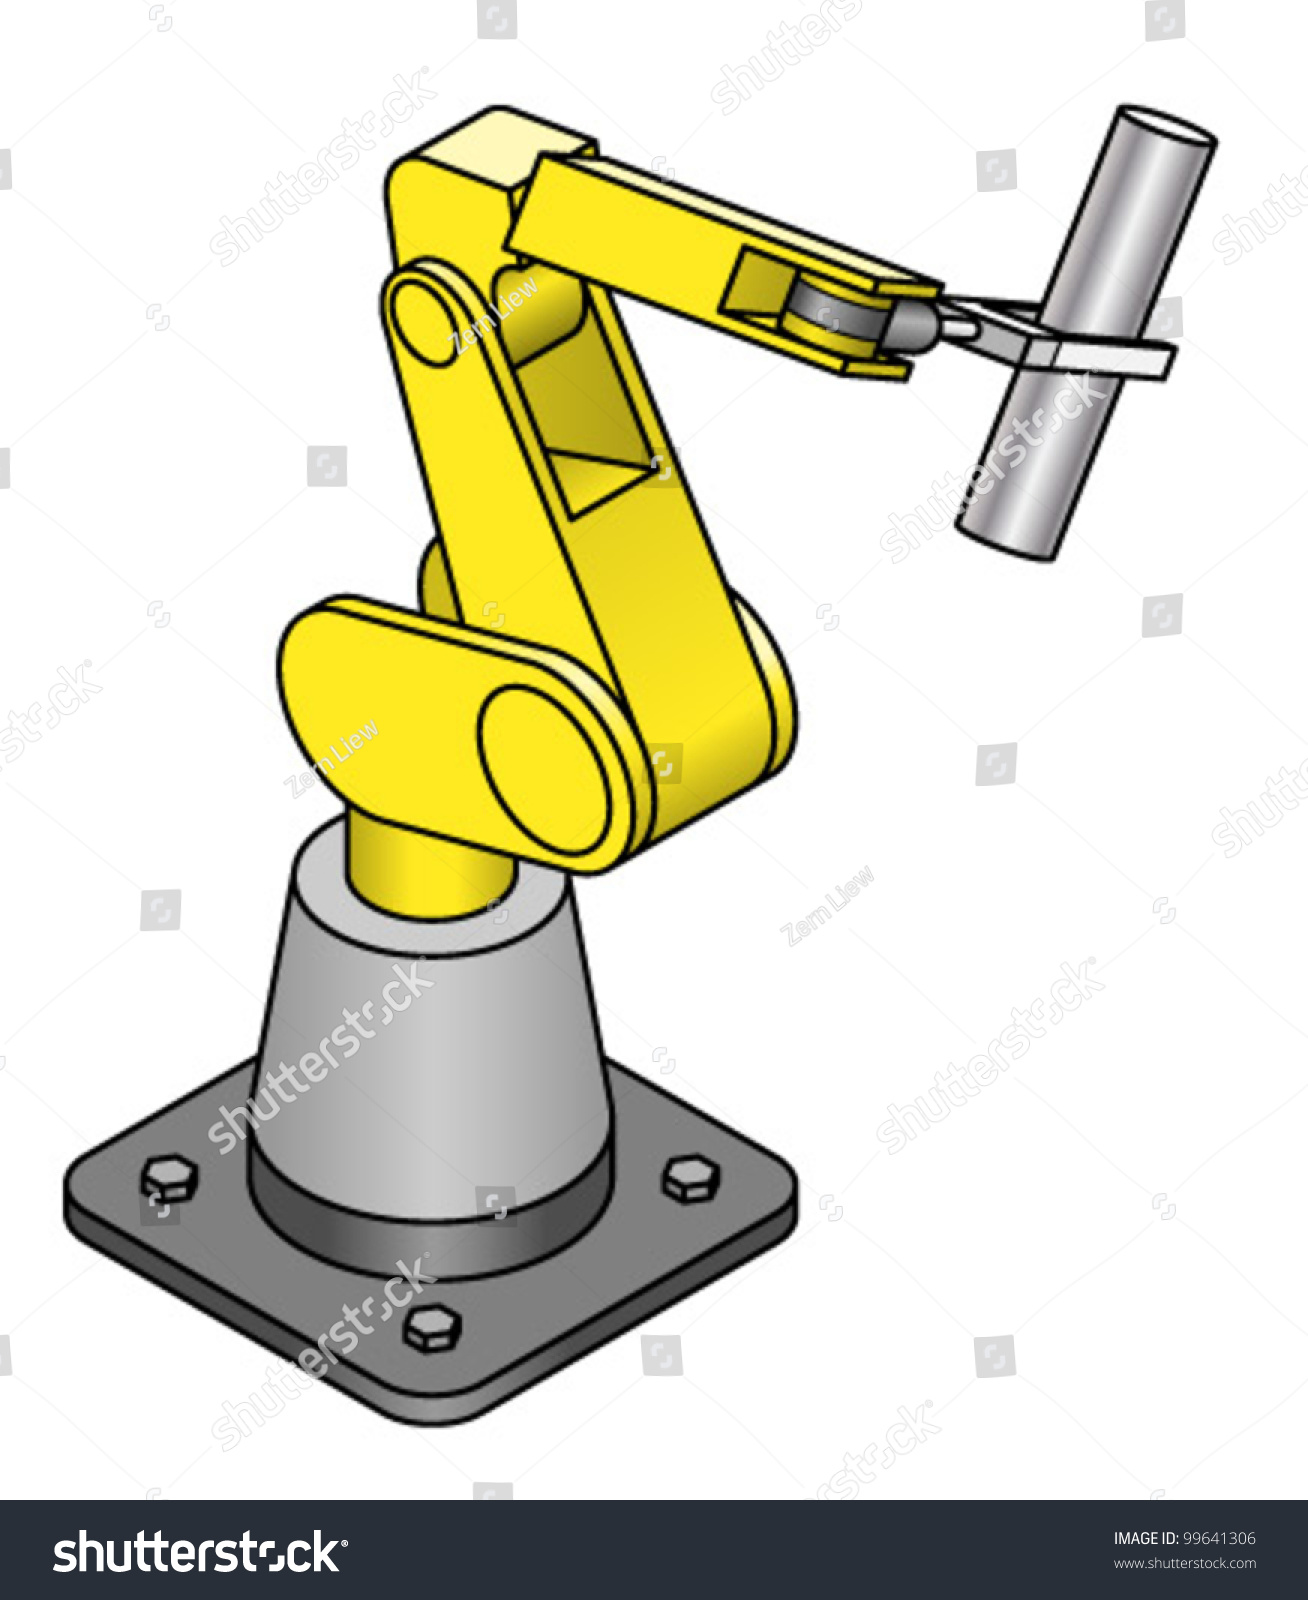 free clipart robot arm - photo #32